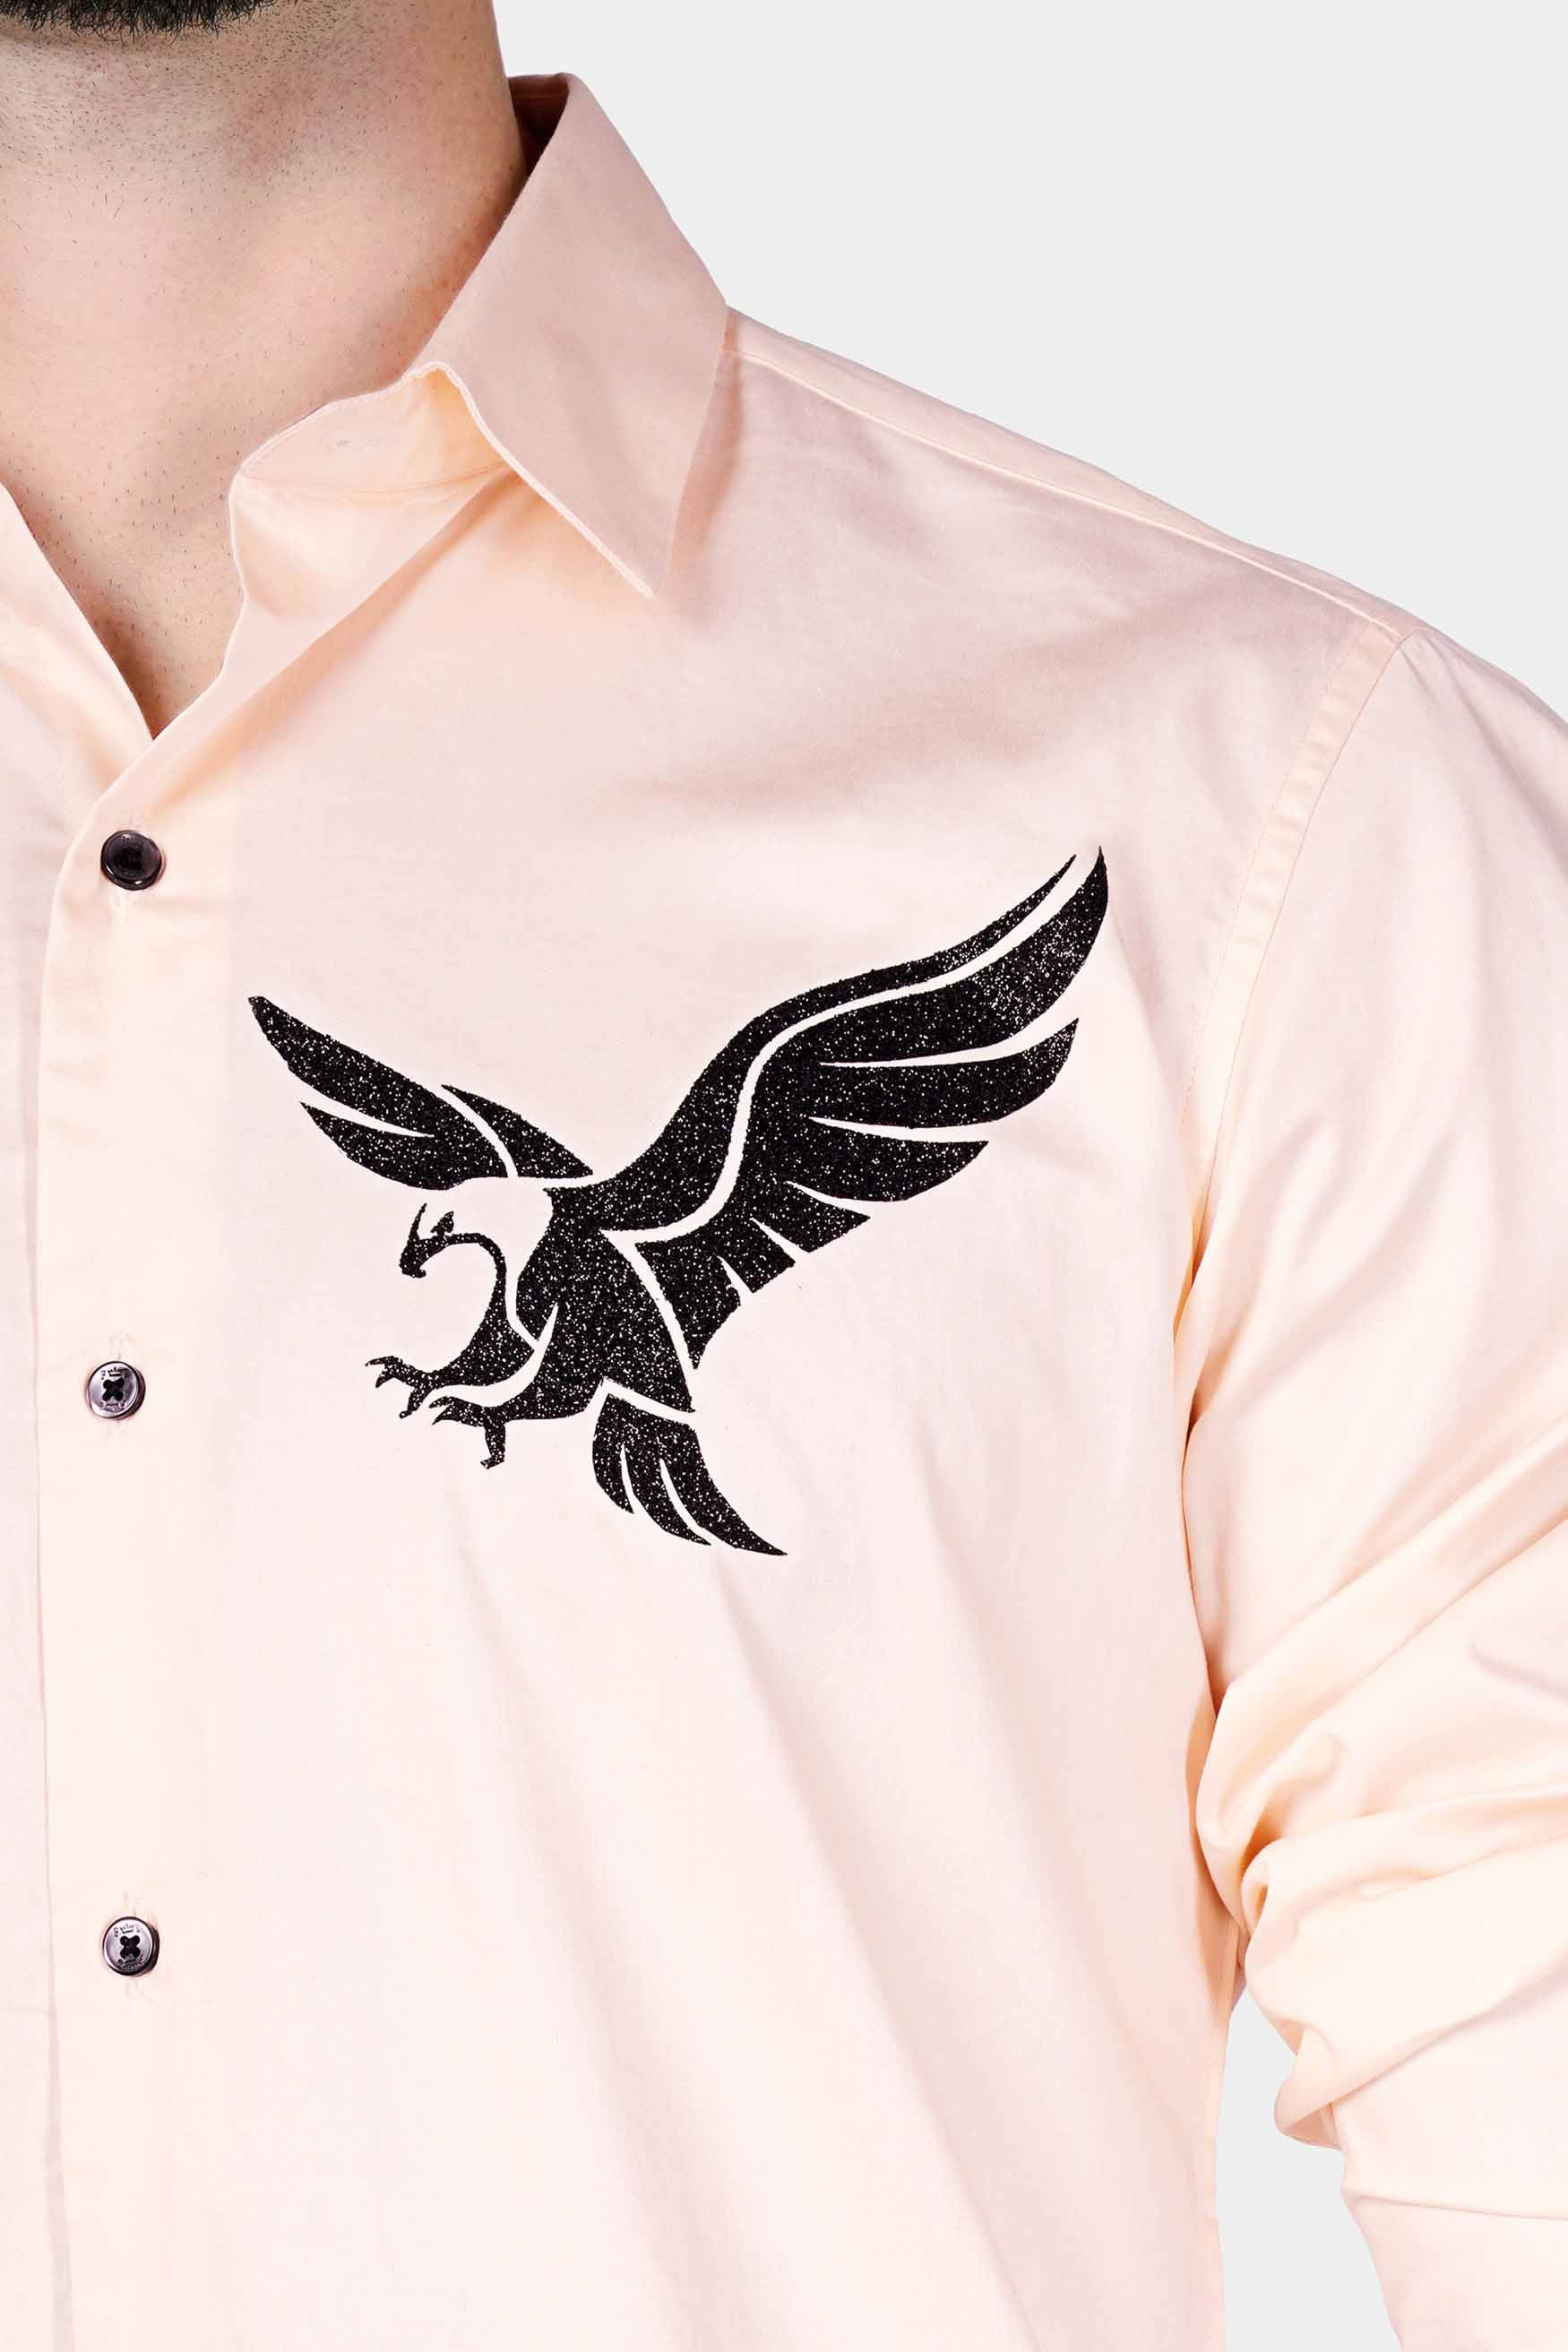 Gainsboro Peach Eagle Foil Printed Subtle Sheen Super Soft Premium Cotton Designer Shirt